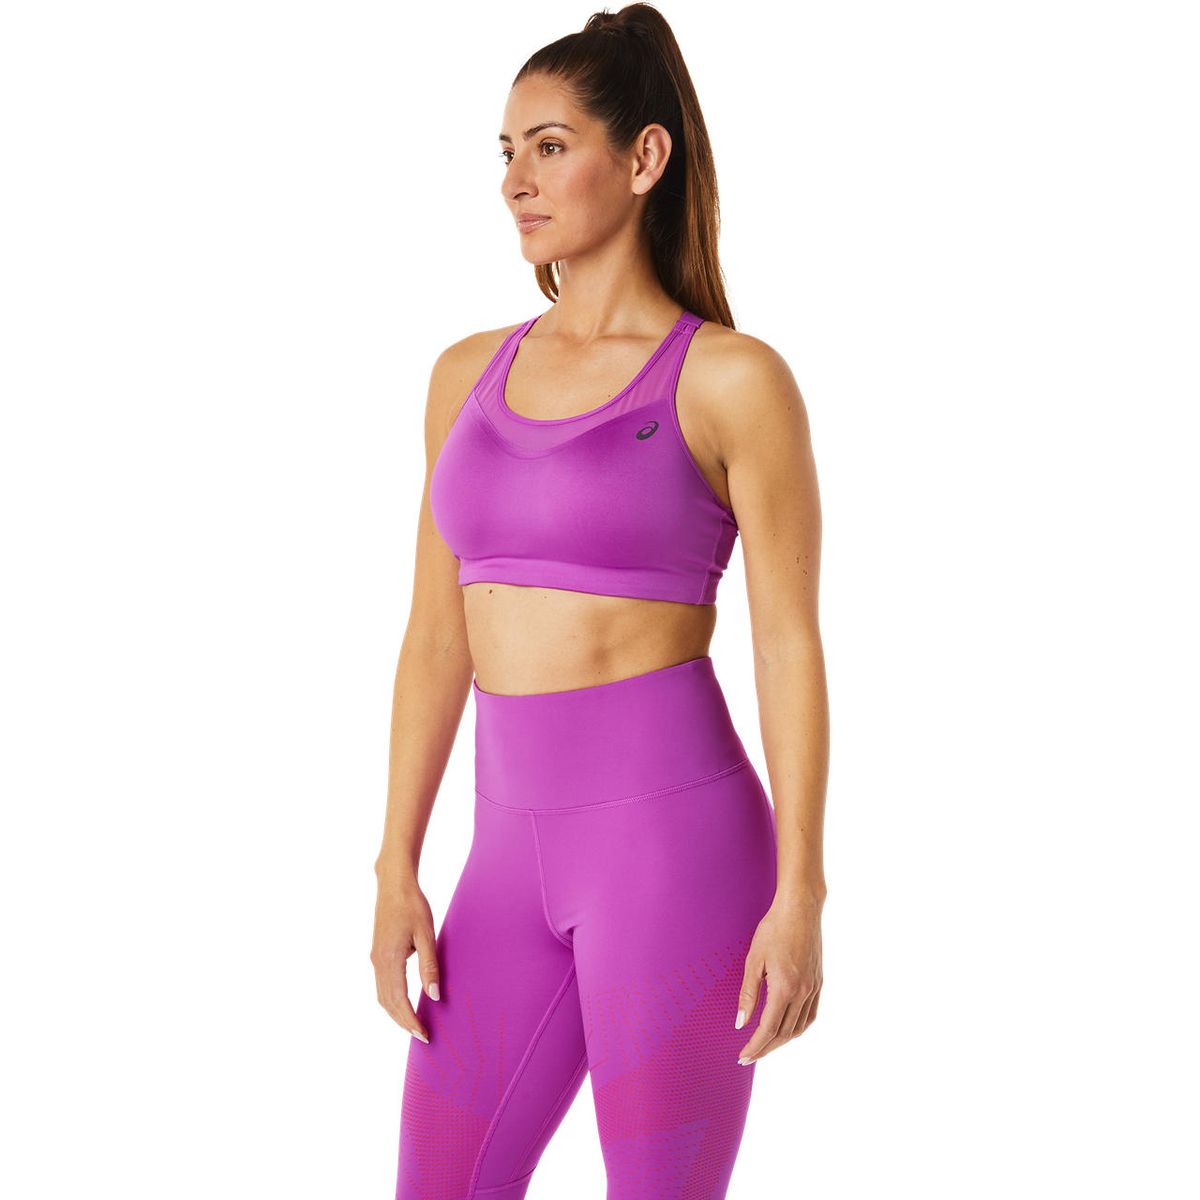 Buy ASICS Accelerate Purple Womens Sports Bra online